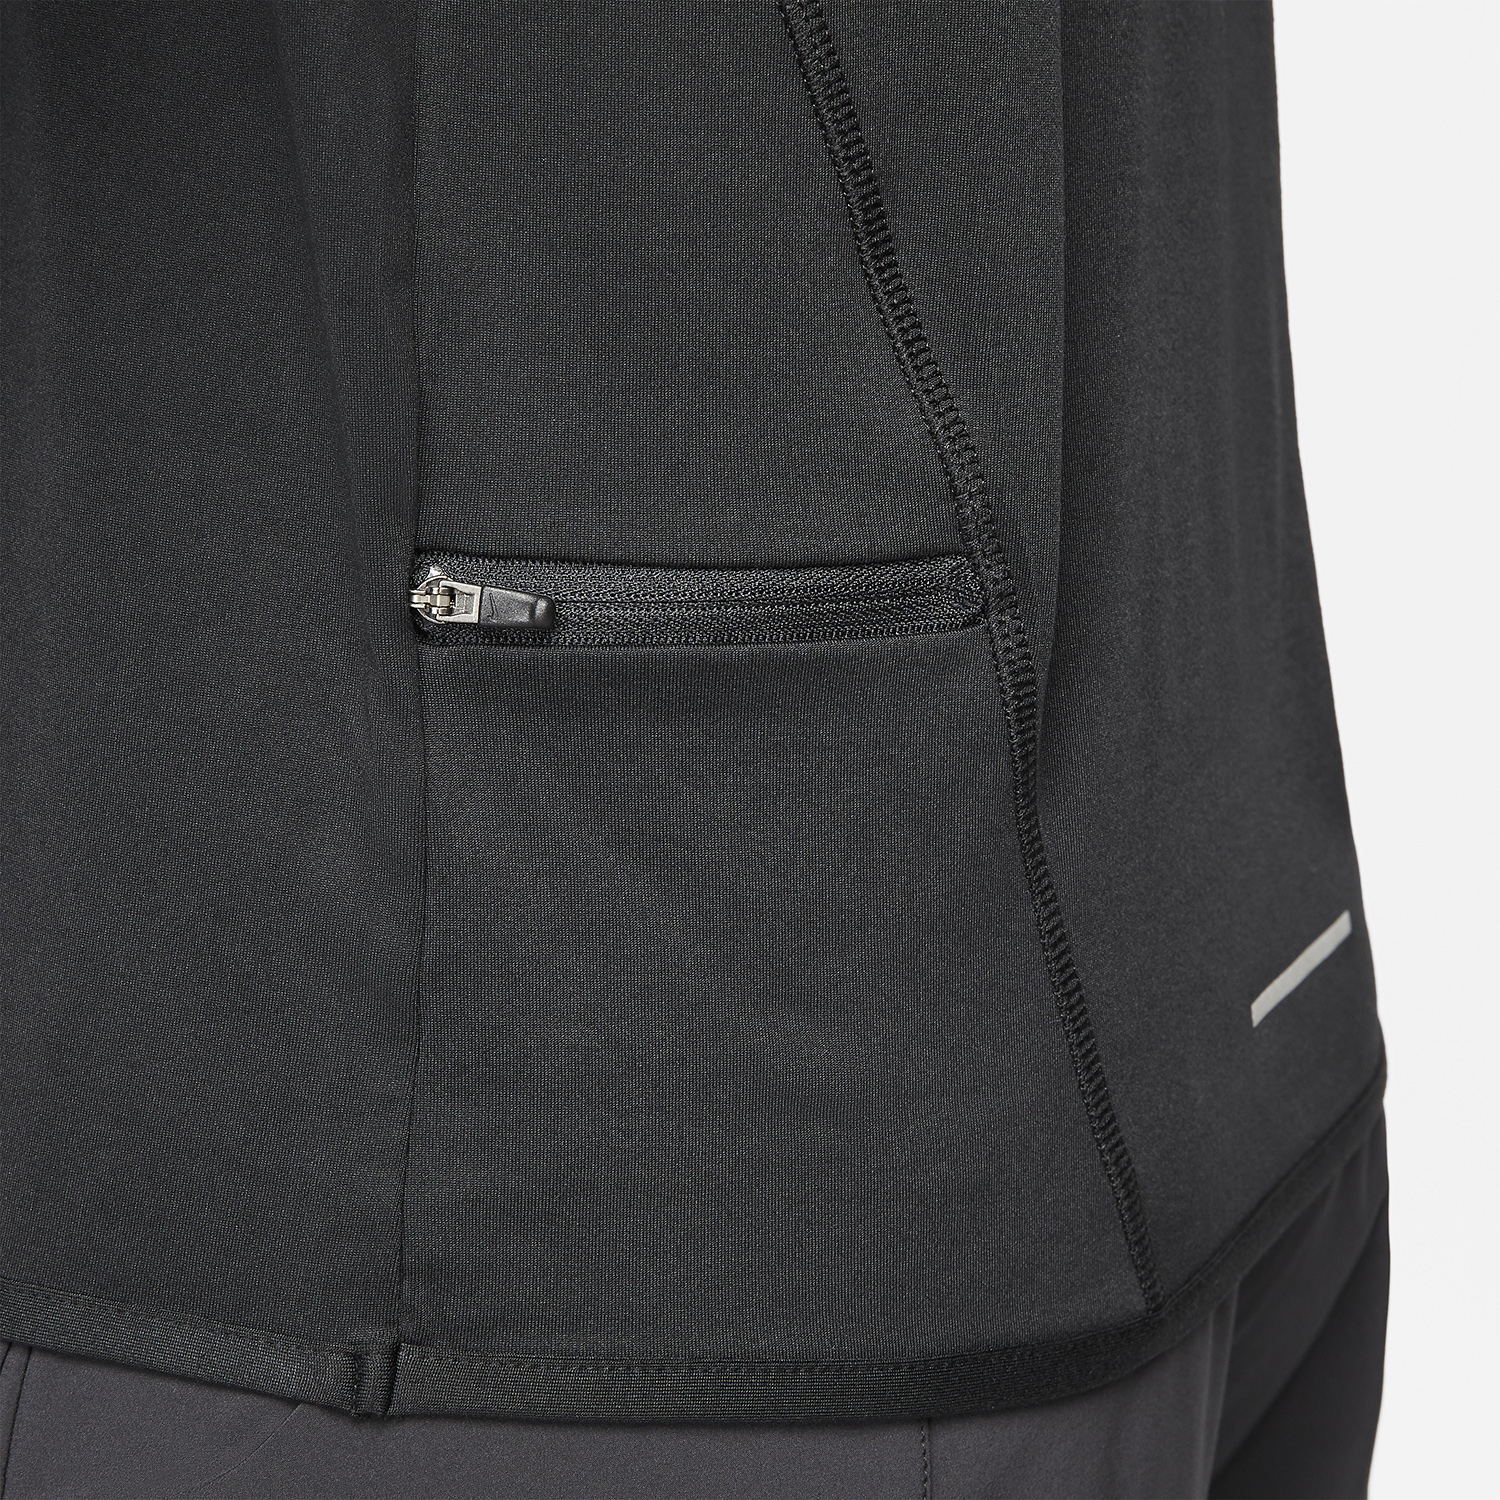 Nike Dri-FIT Swift Element UV Shirt - Black/Reflective Silver